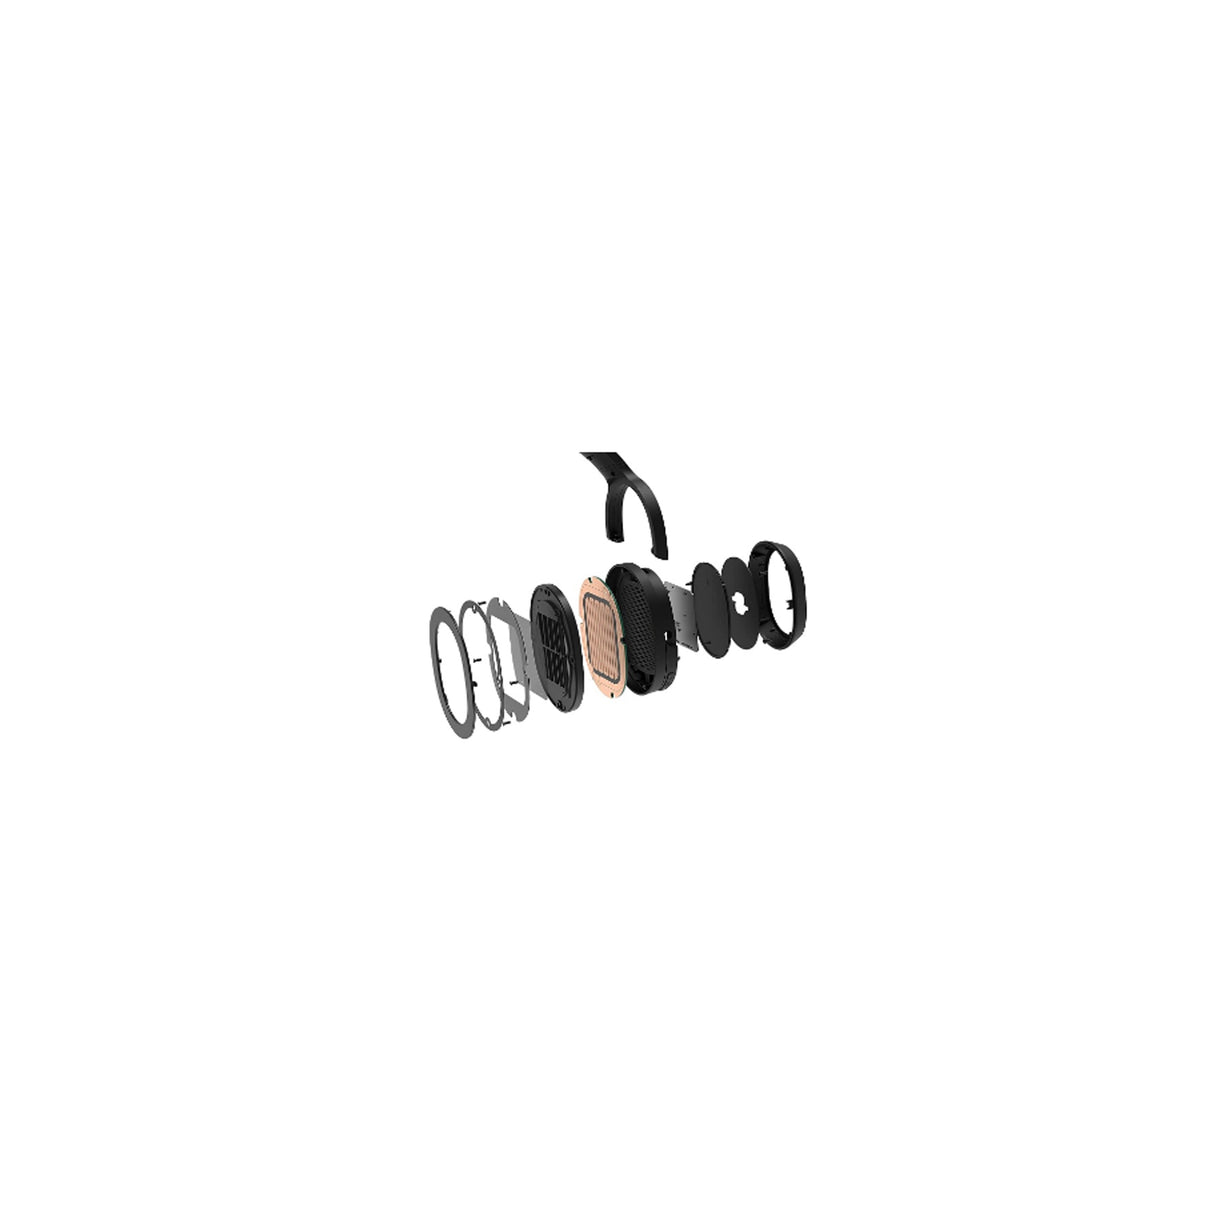 Edifier STAX Spirit S3 Wireless Planar Magnetic Headphone (Black)